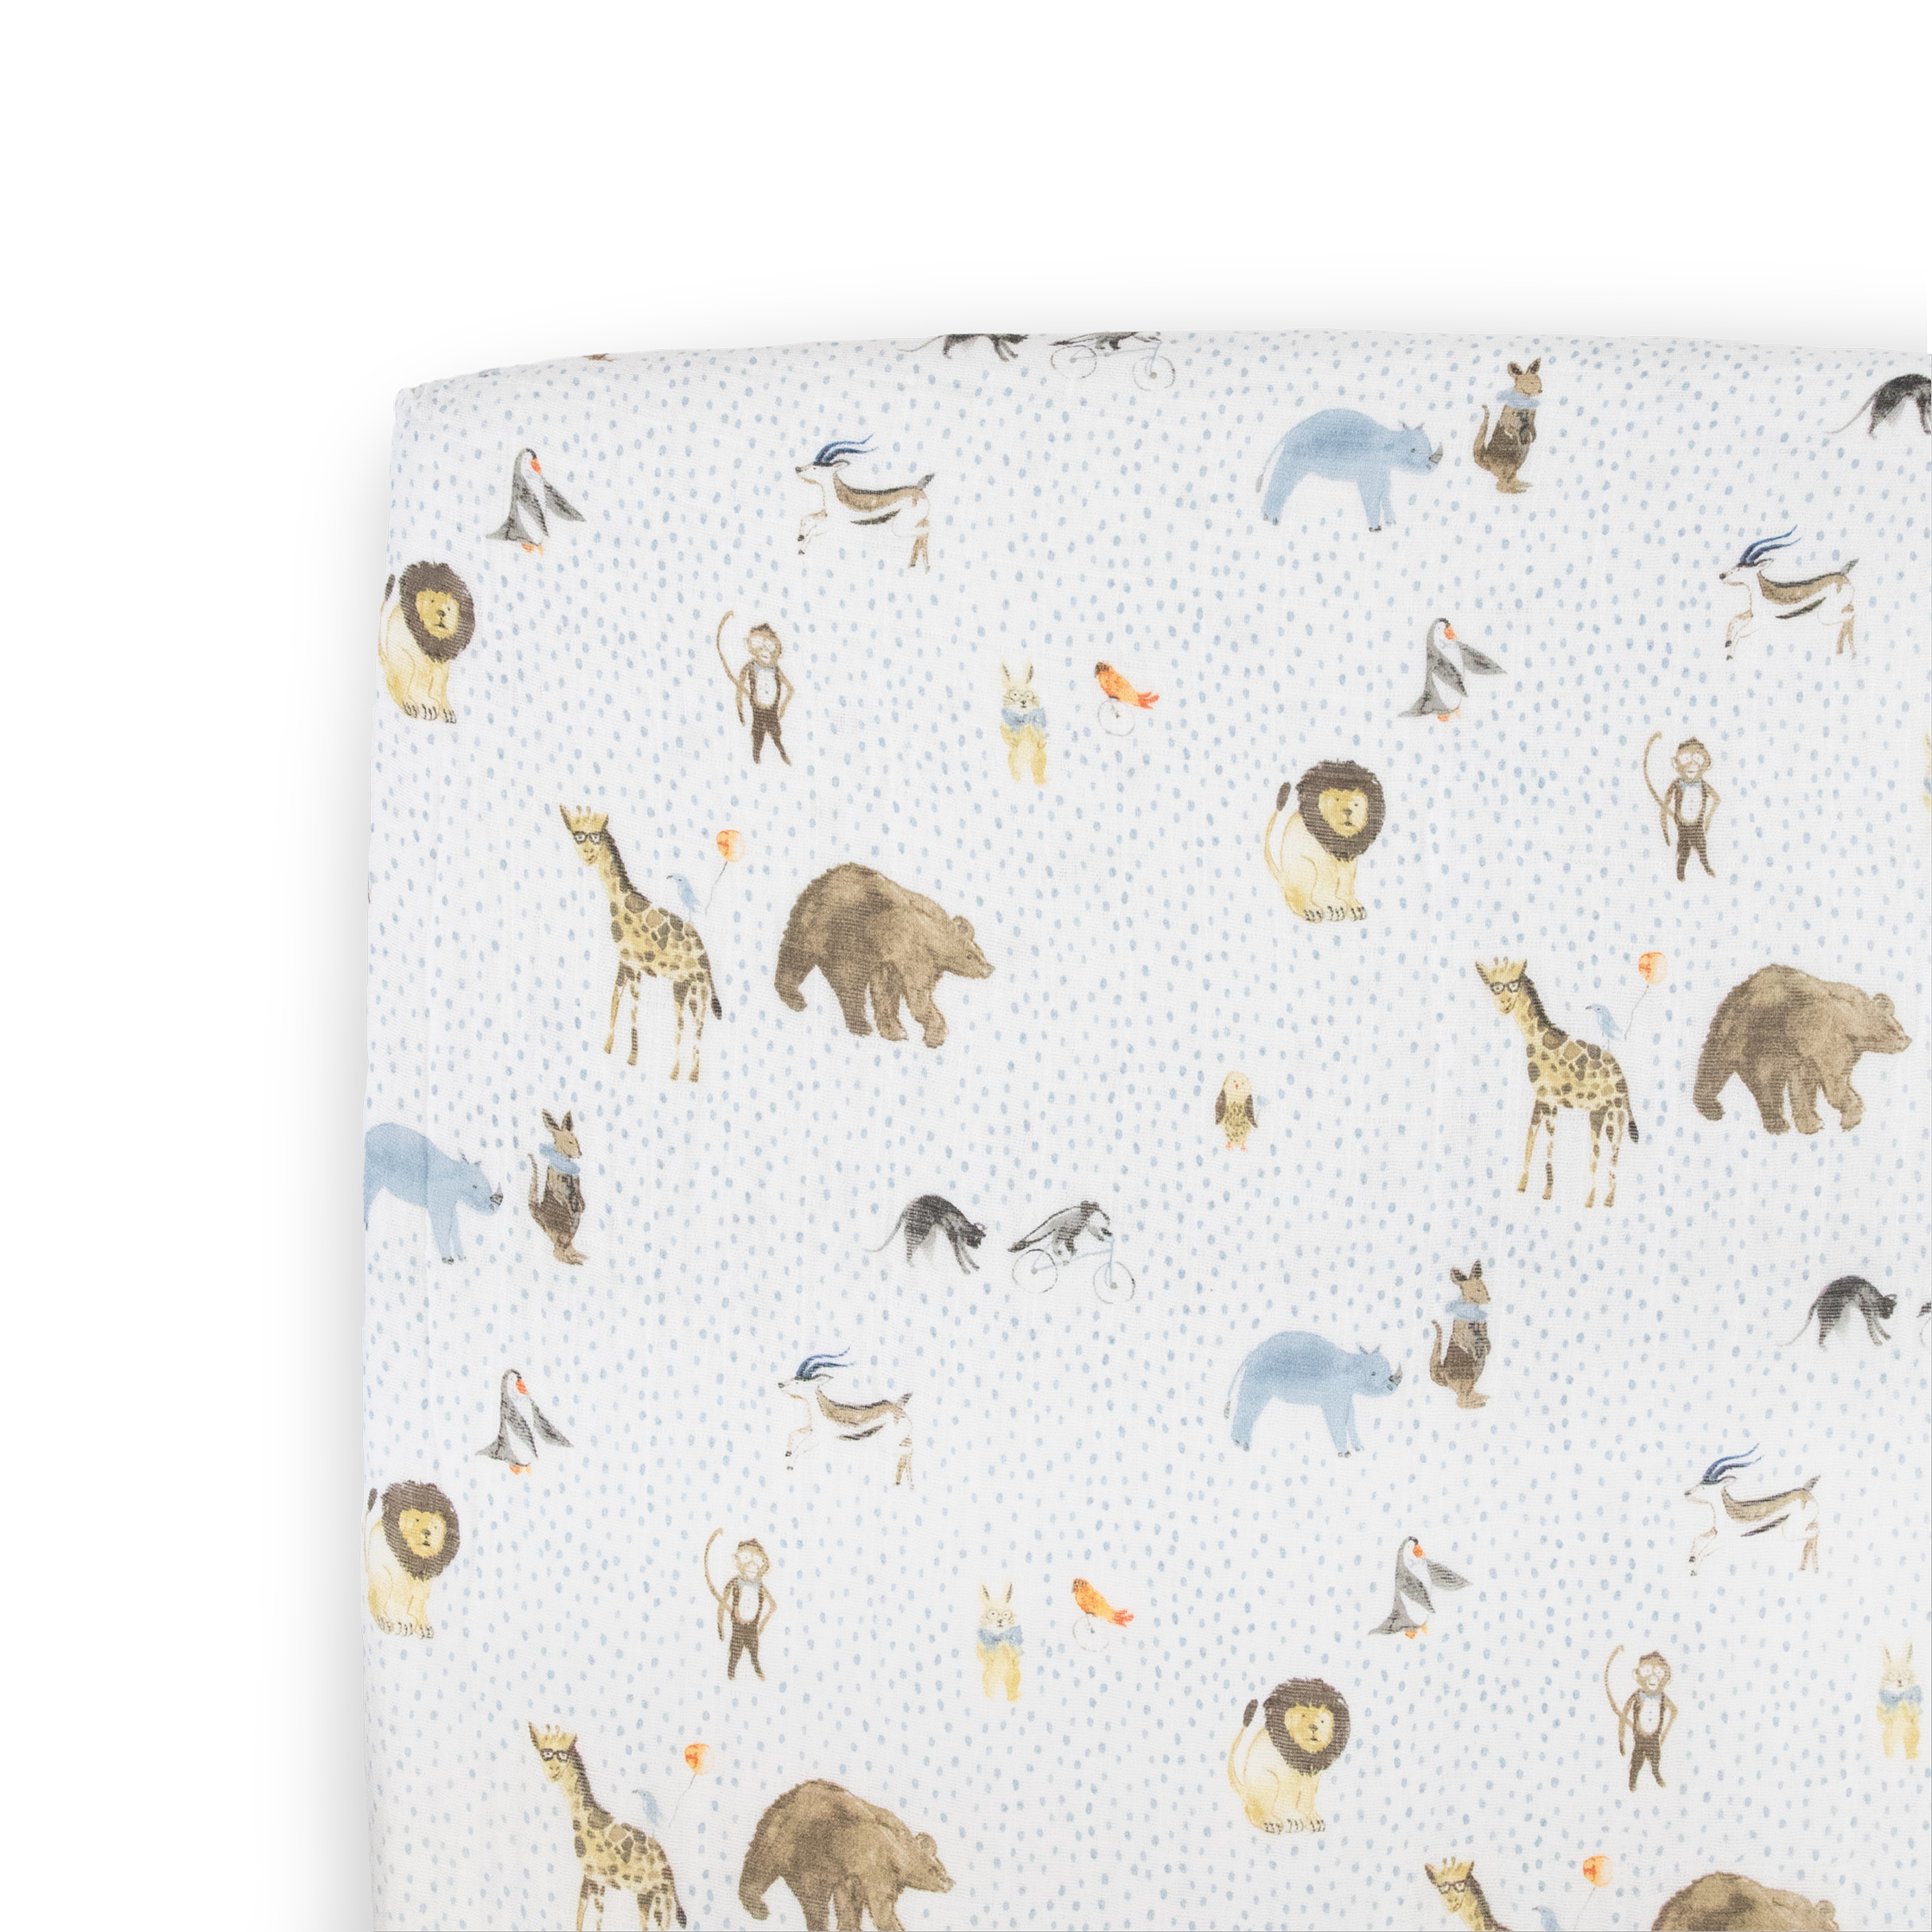 Cotton Muslin Crib Sheet - Party Animals